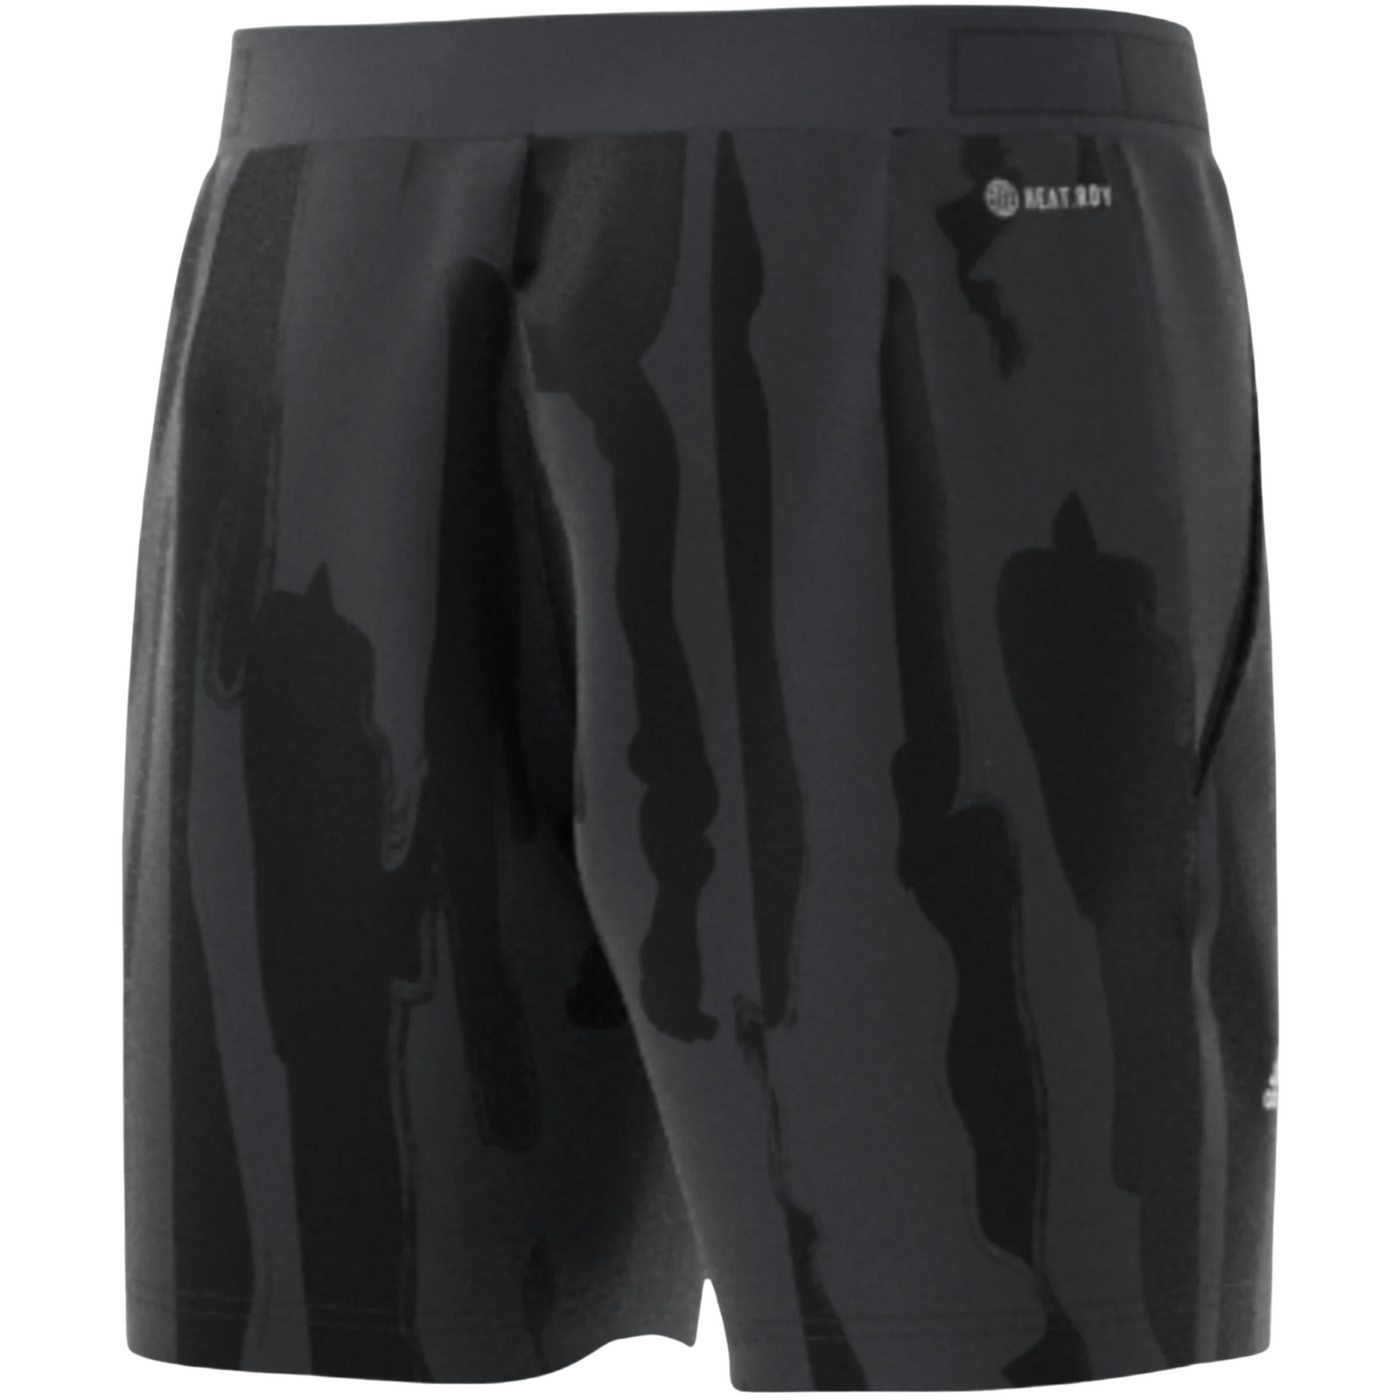 Adidas Tennis New York Graphic Shorts - Carbon/Black